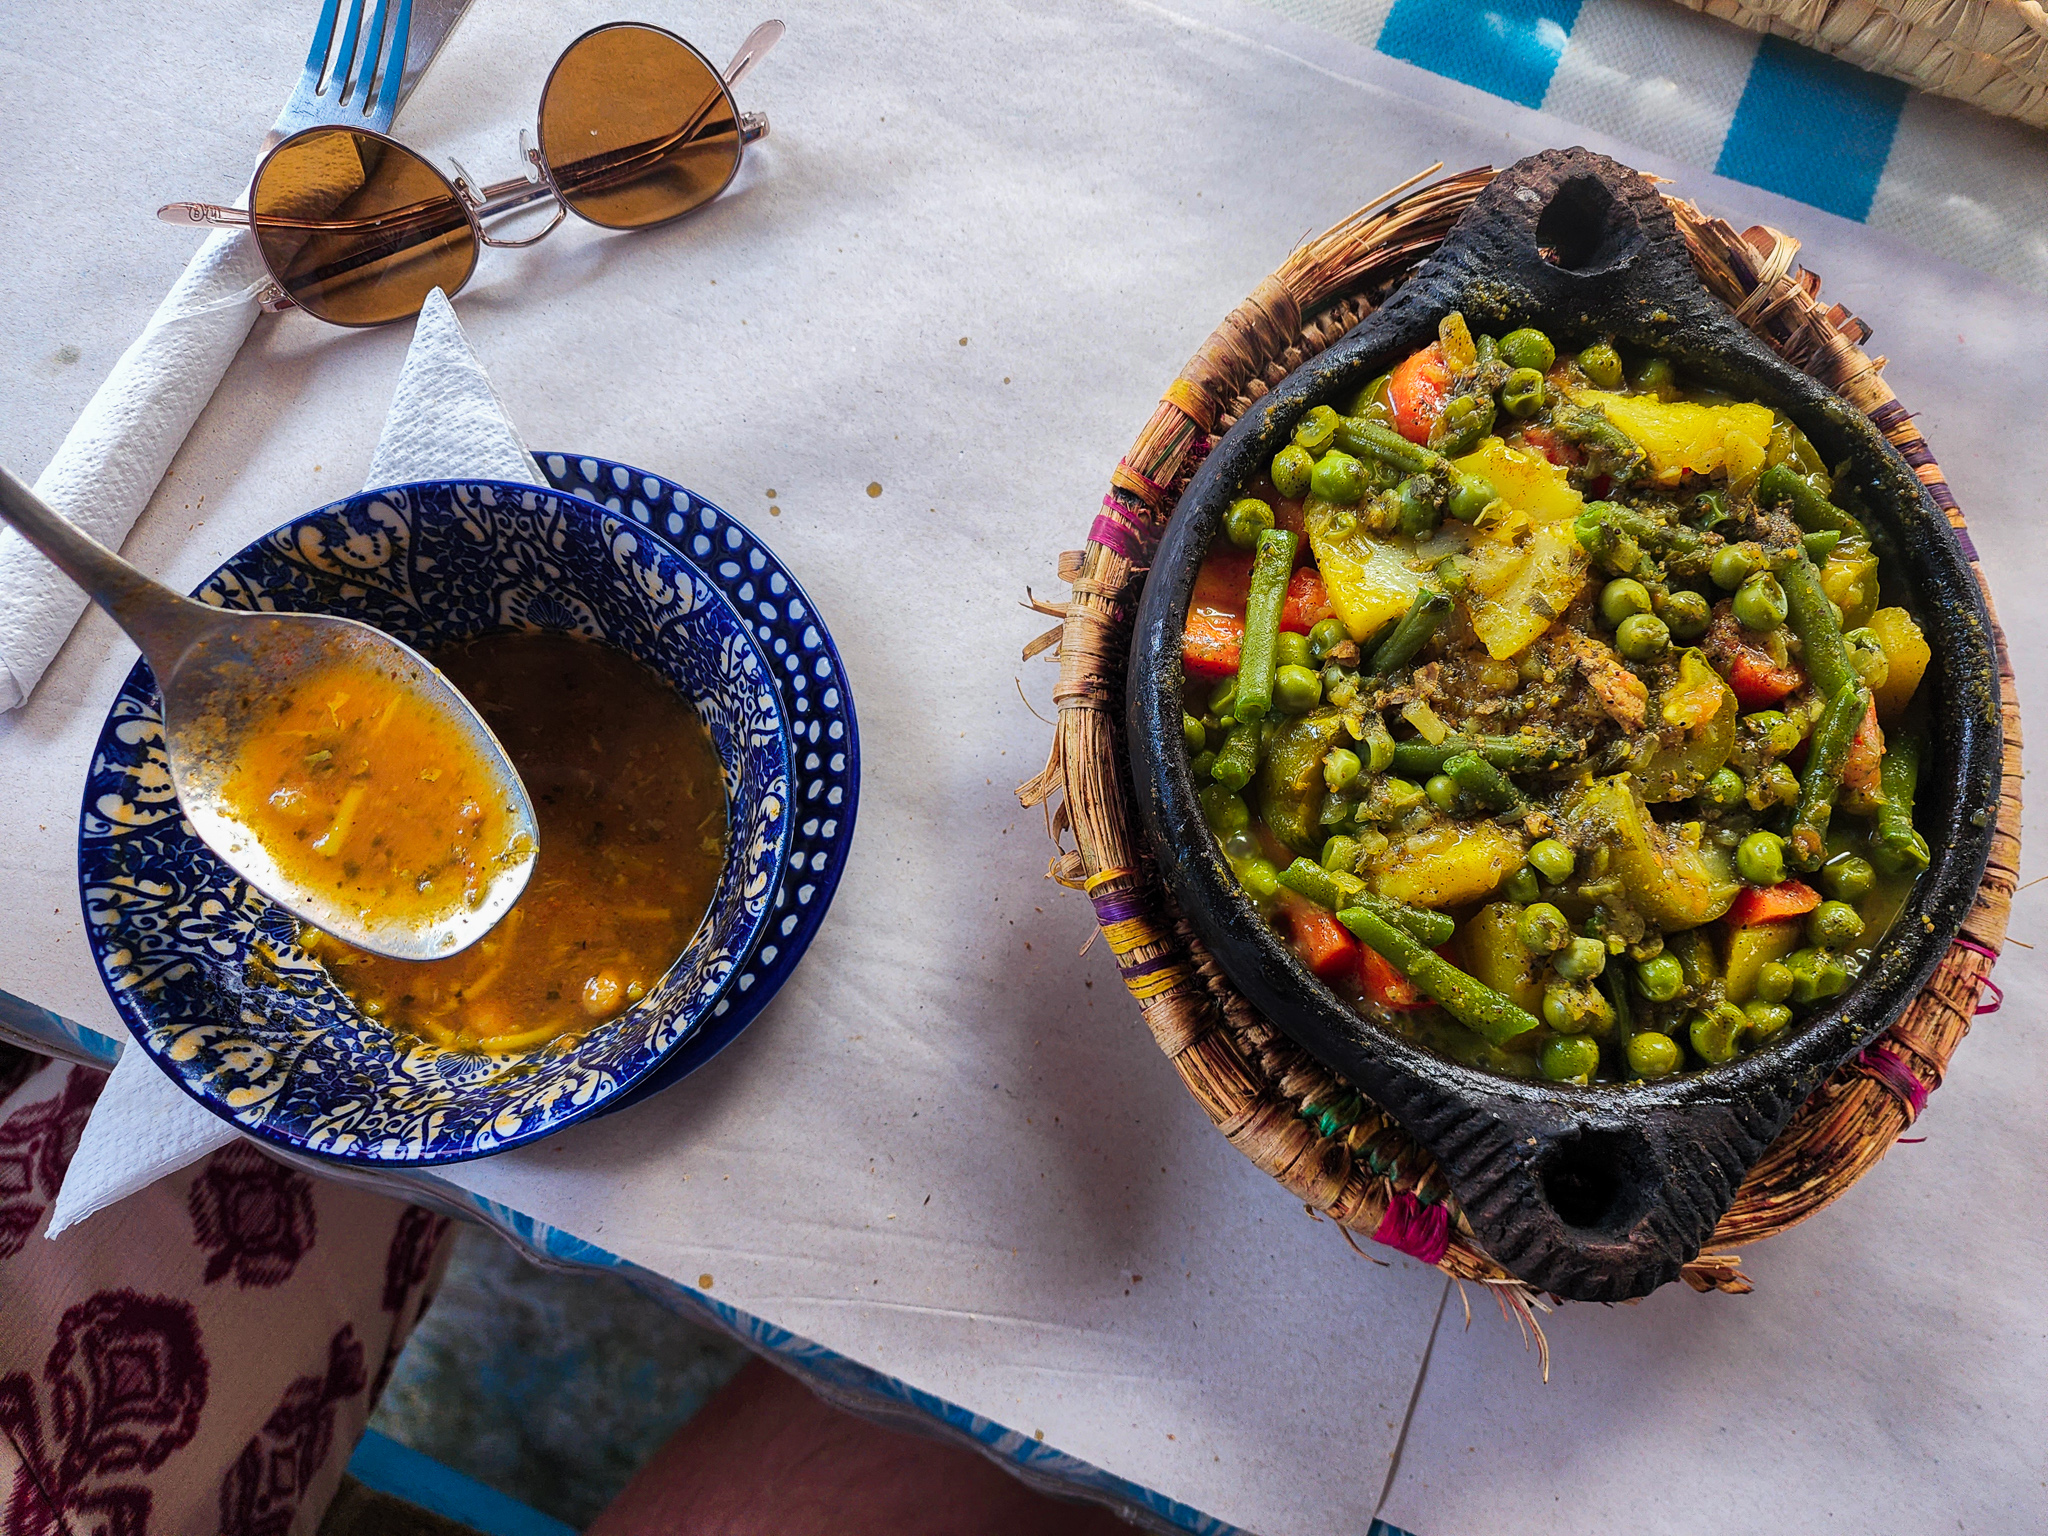 sofia restaurant chefchaouen morocco